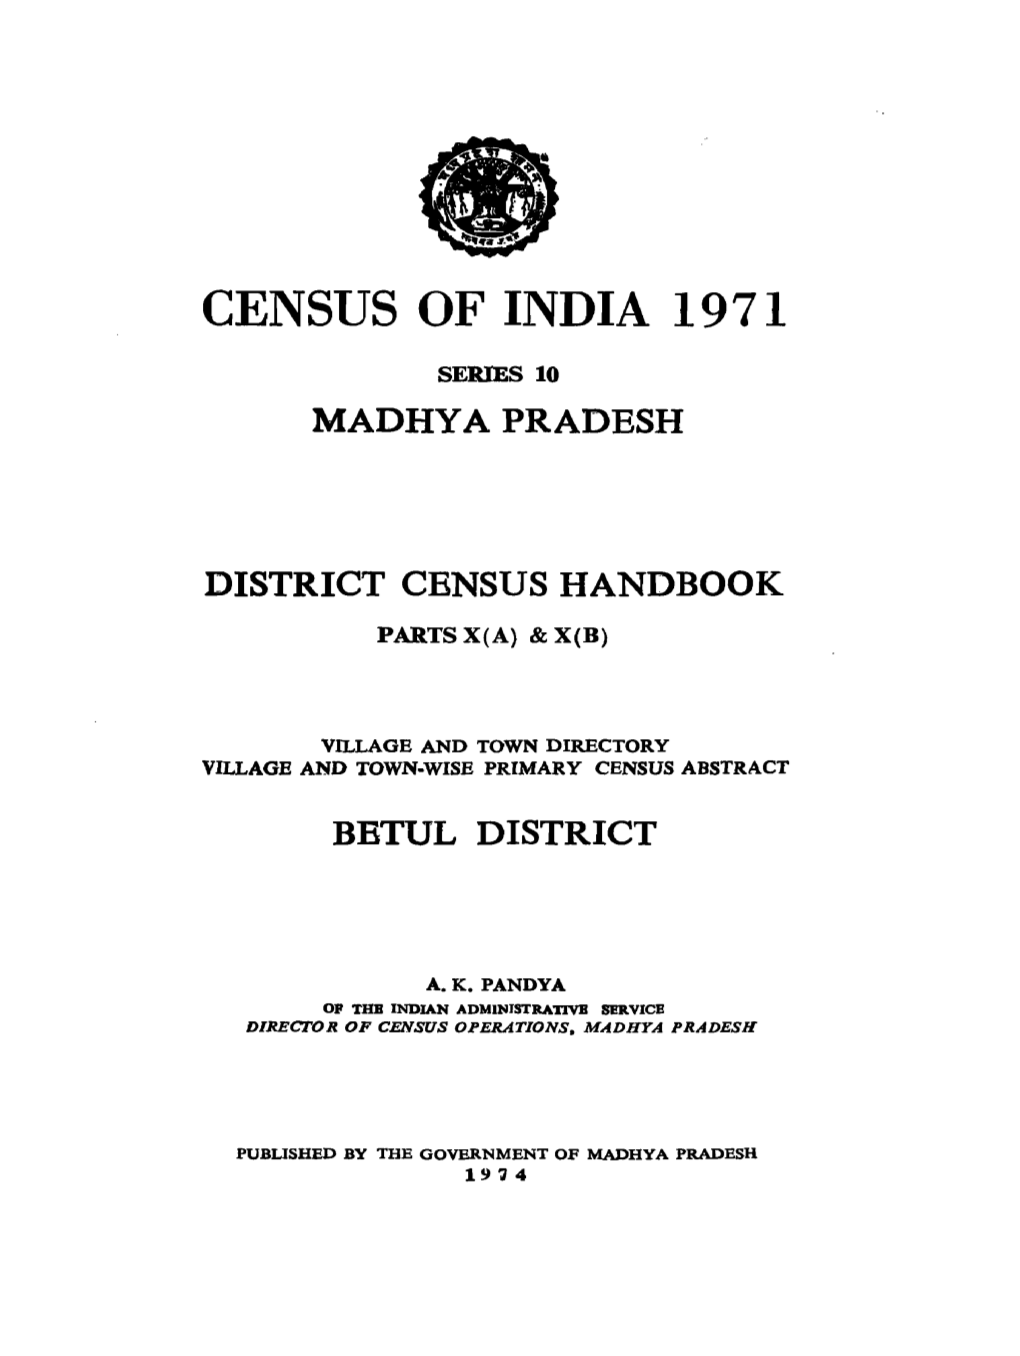 District Census Handbook, Betul, Parts X (A) & X(B), Series-10